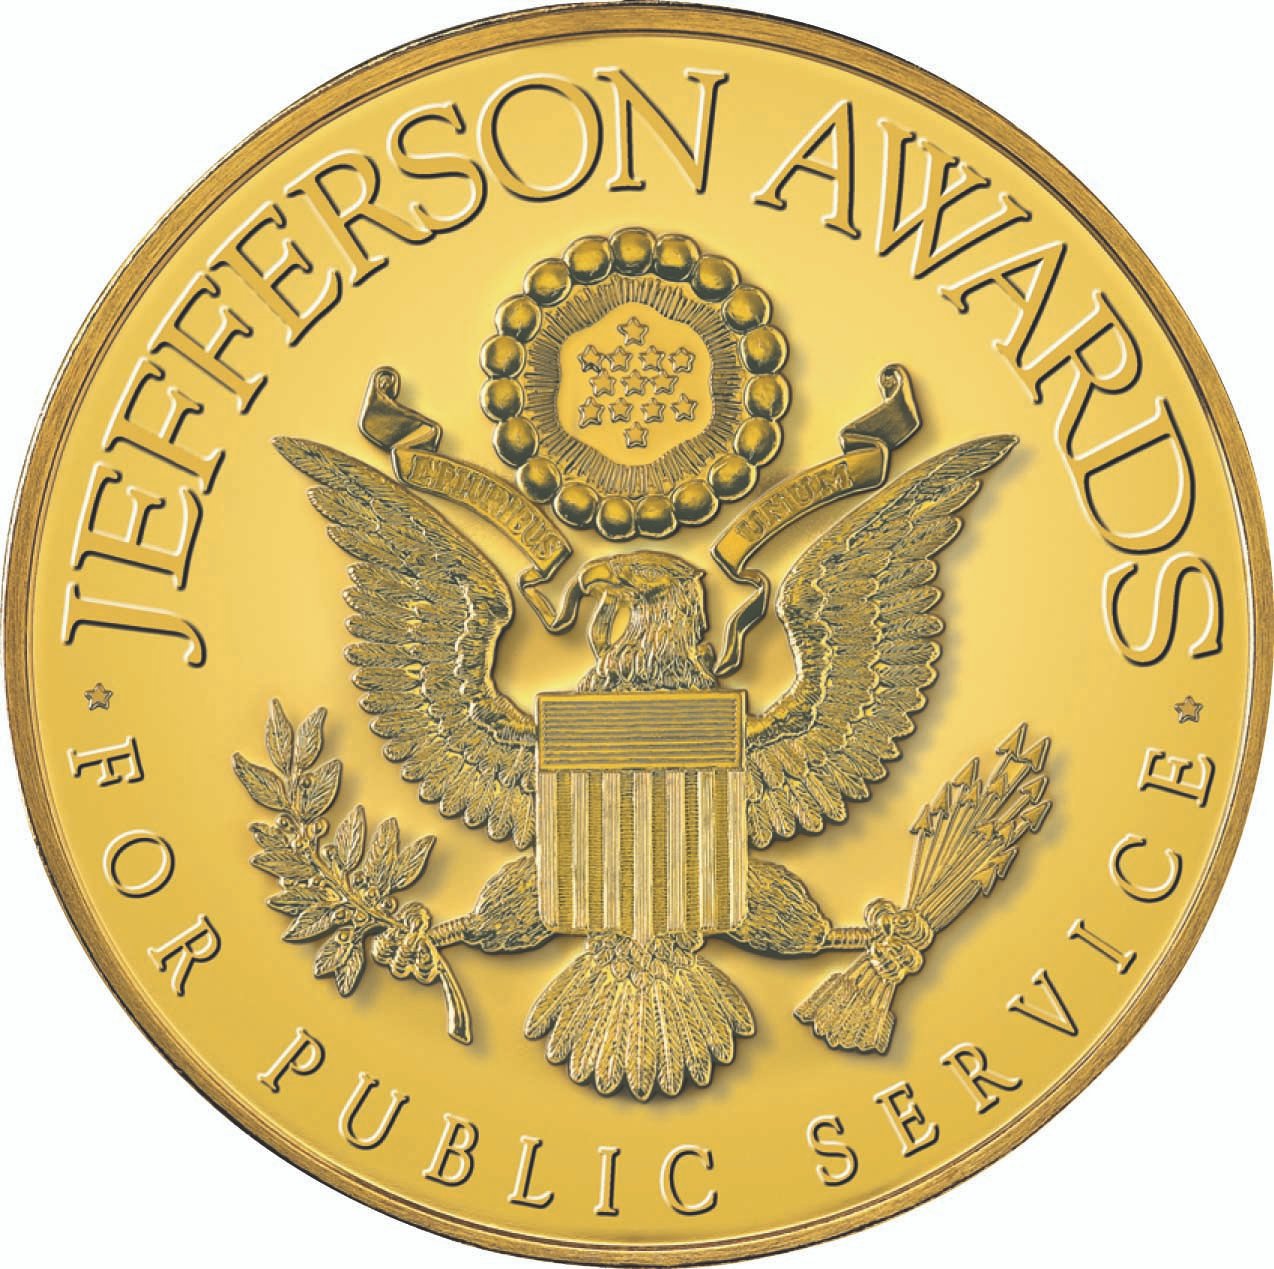 jefferson award for public service